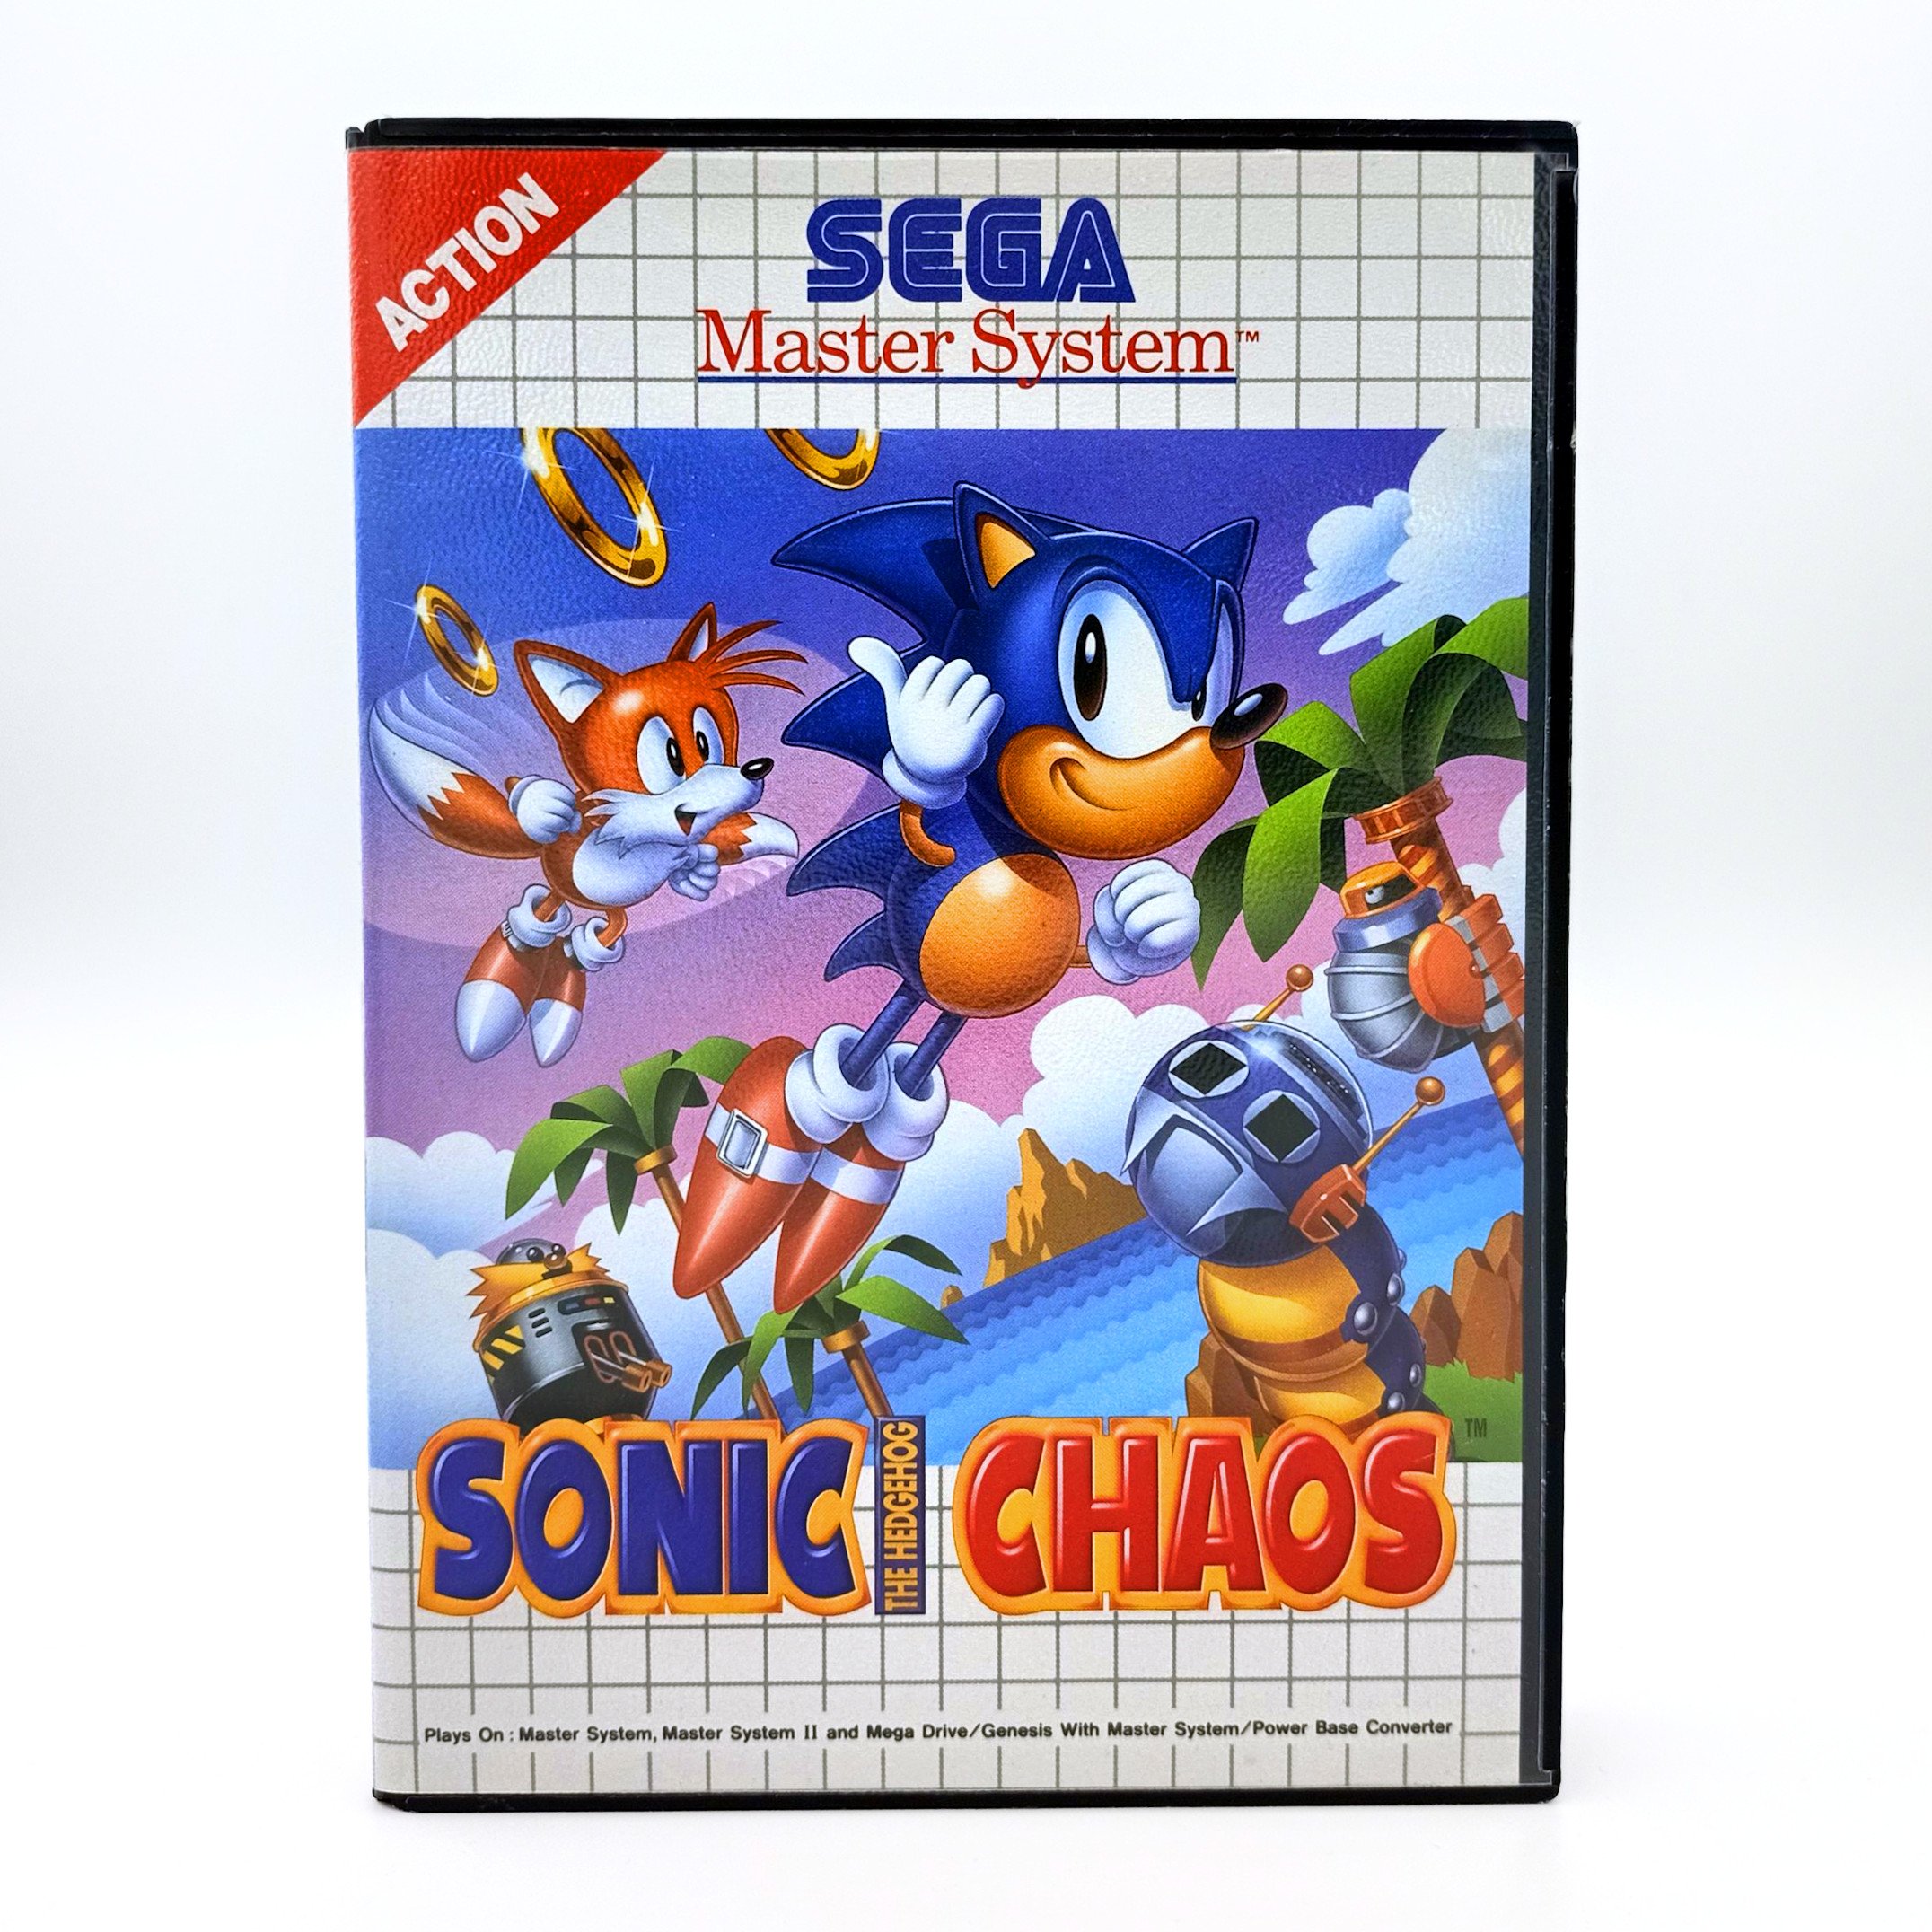 David Jaumandreu on X: No.318: Sonic Chaos - SEGA - Master System (1993)   / X